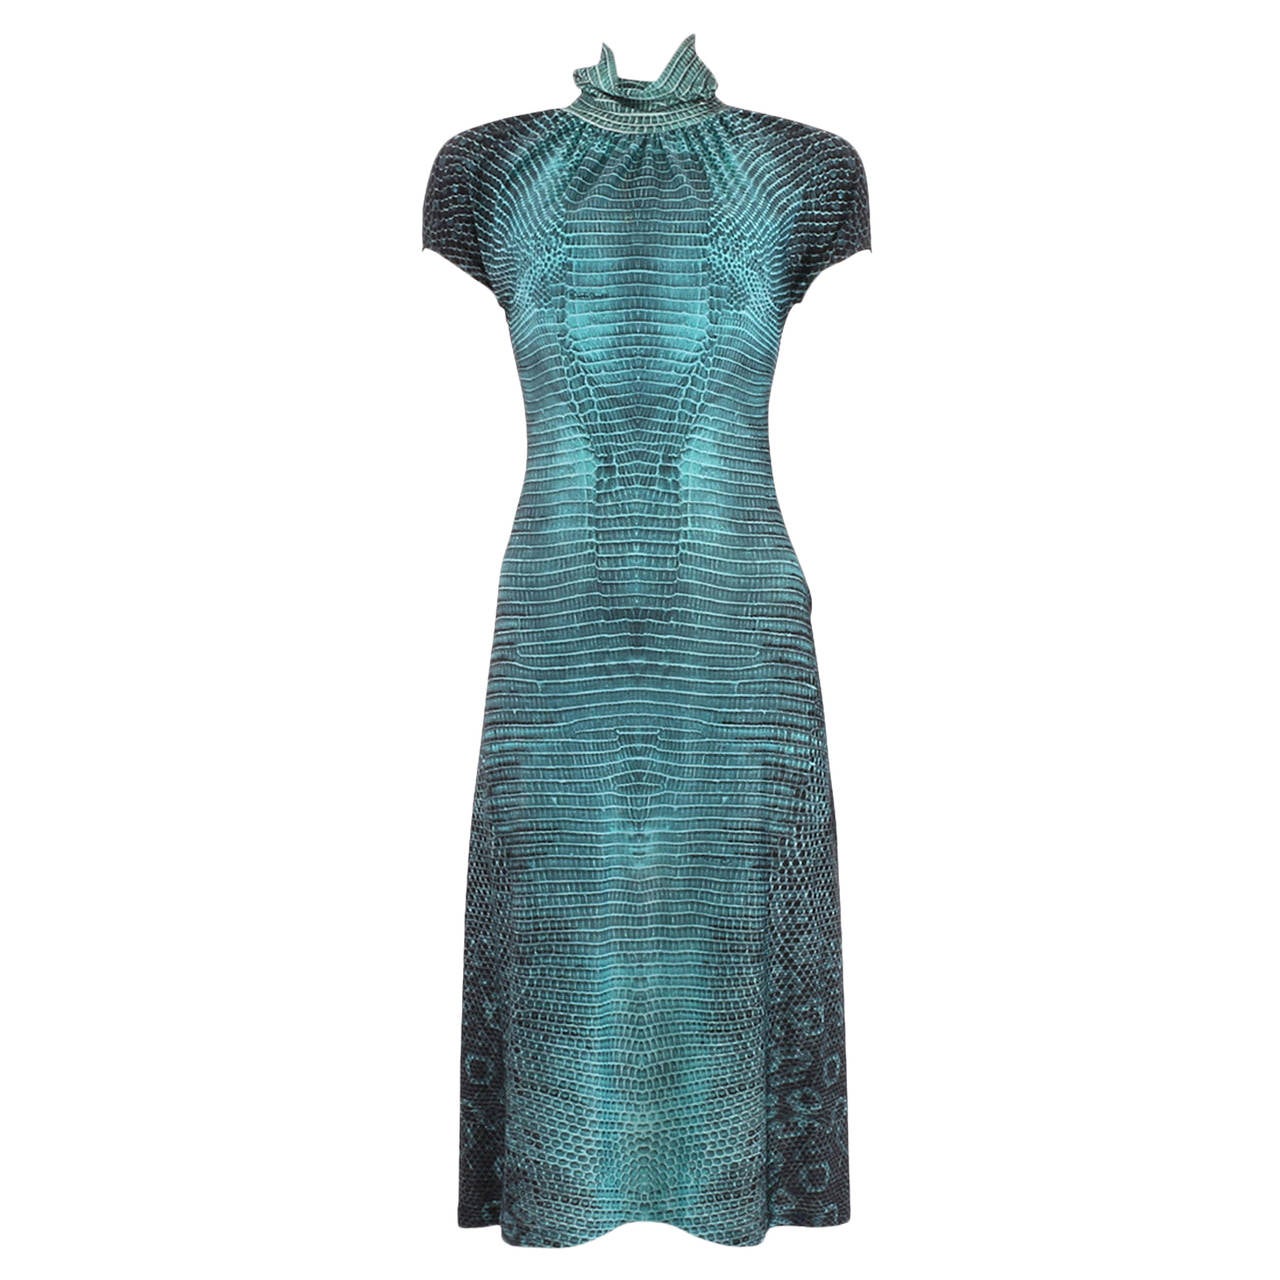 Roberto Cavalli Snake Skin Print Turquoise Cowl Neck Dress - Size M